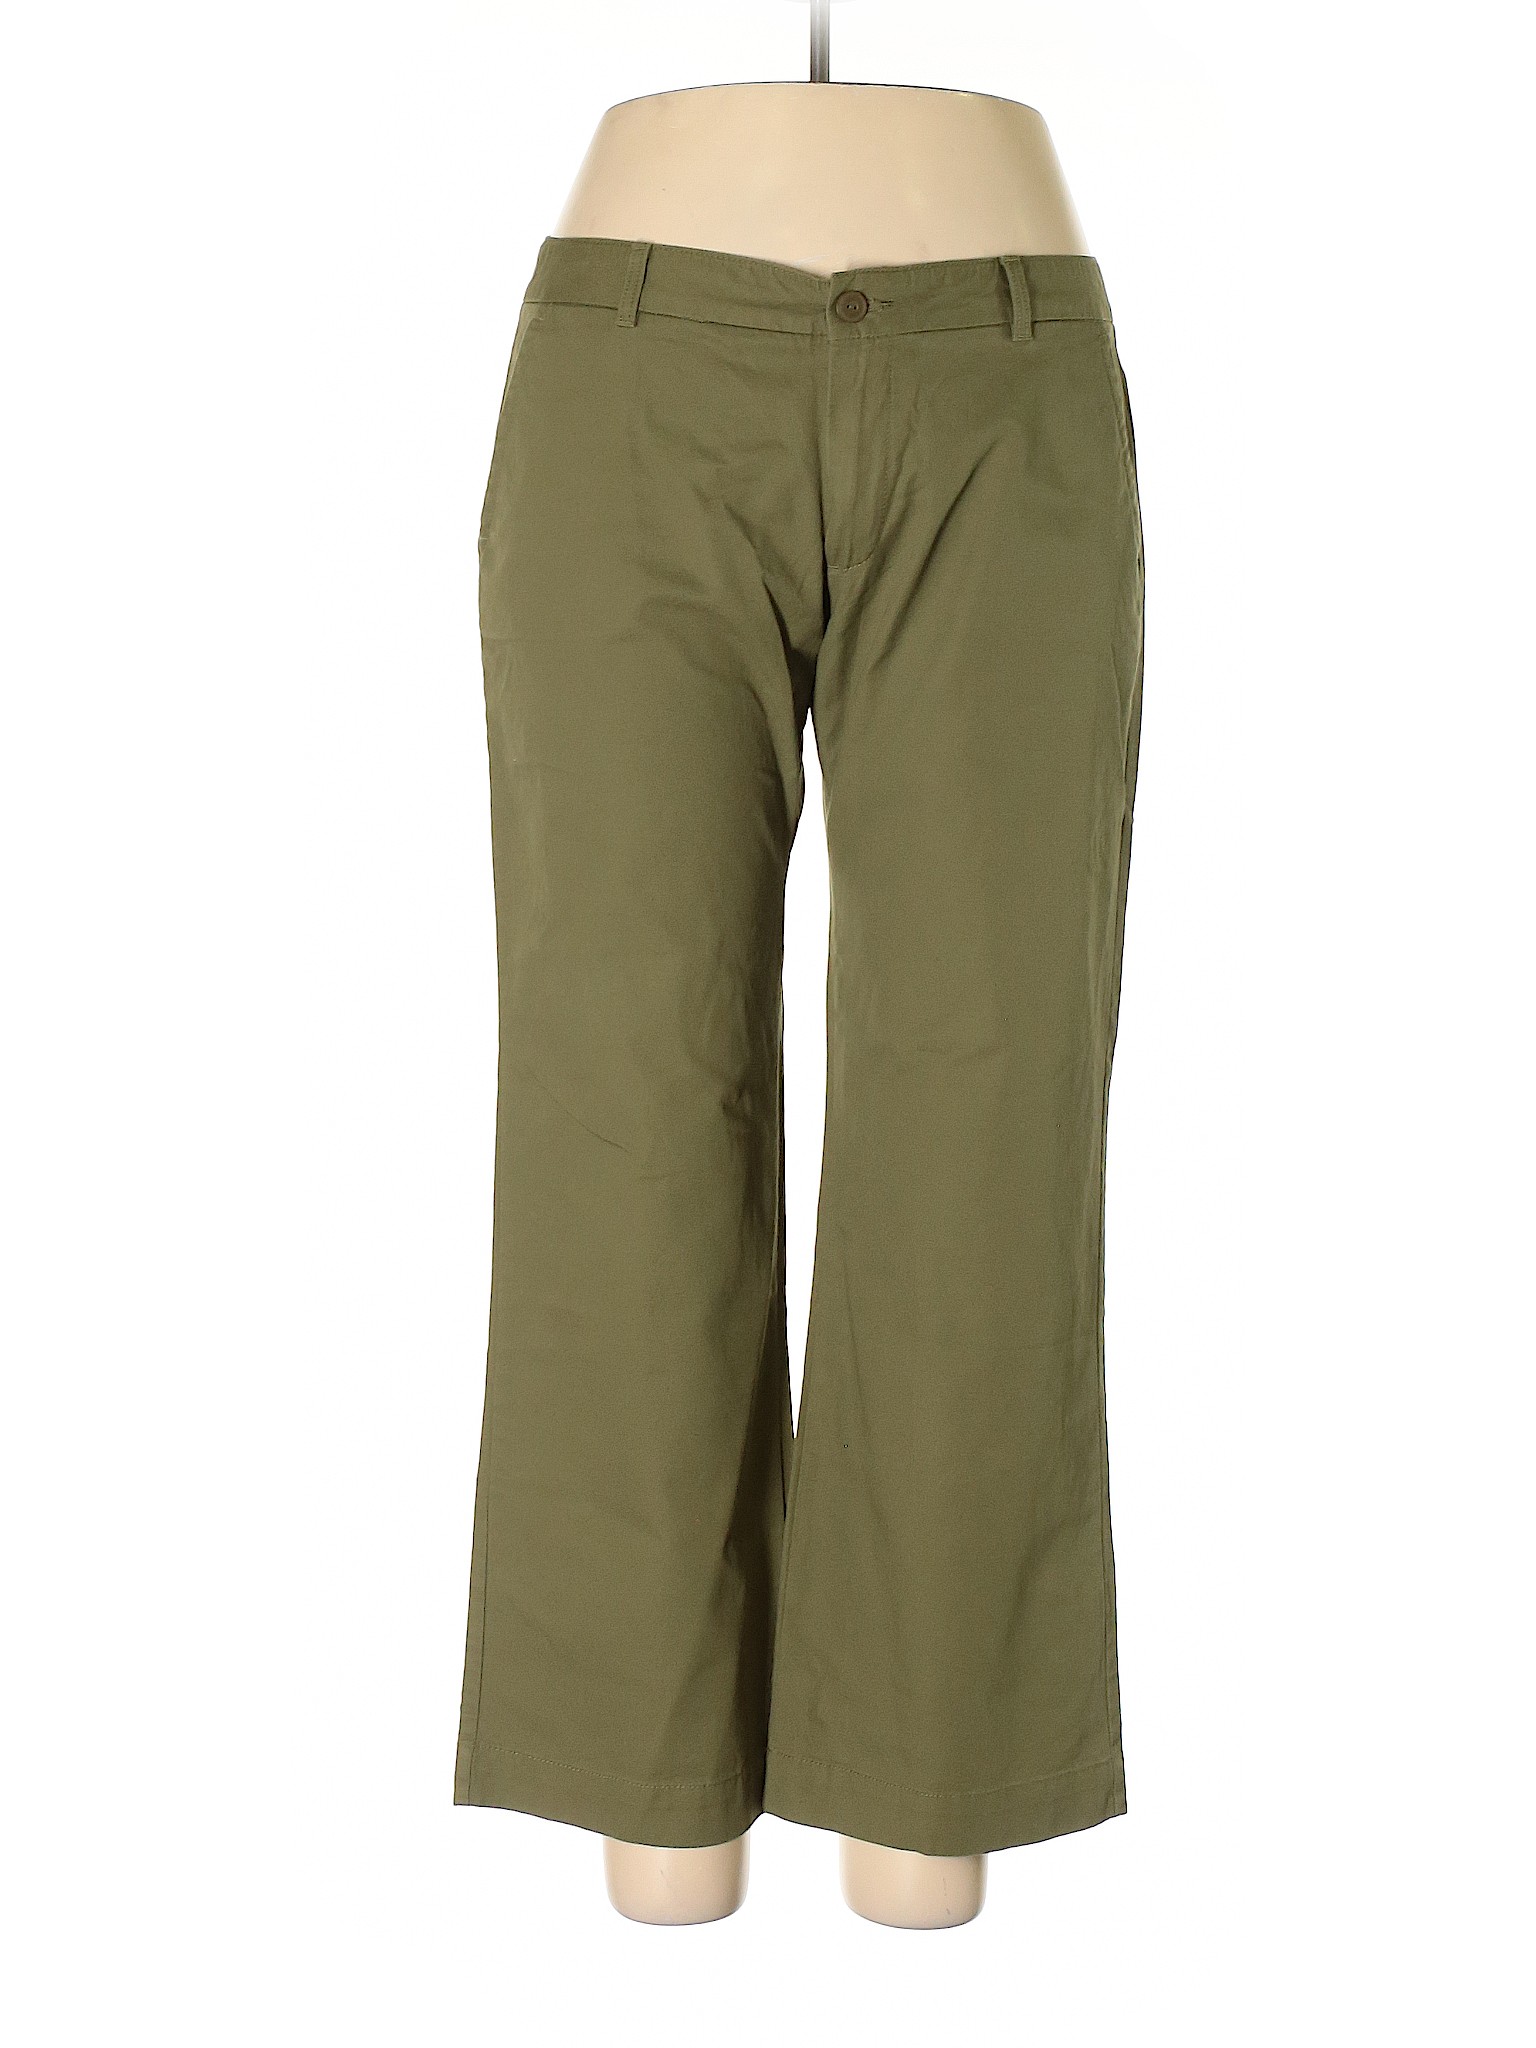 Gap Women Green Khakis 14 | eBay